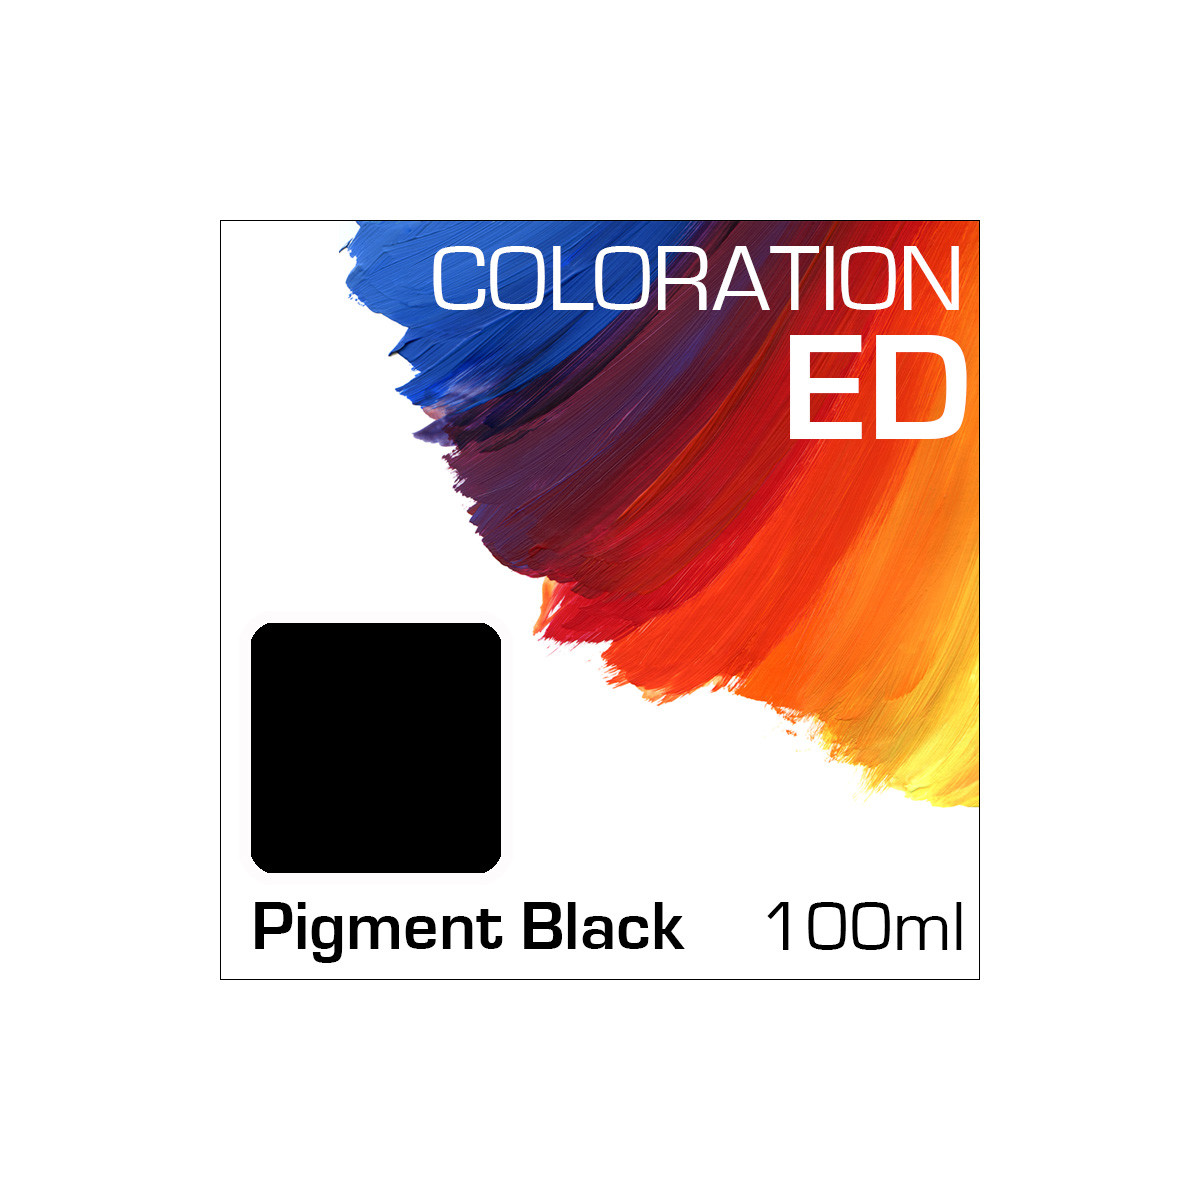 Coloration ED Flasche 100ml Pigment-Black